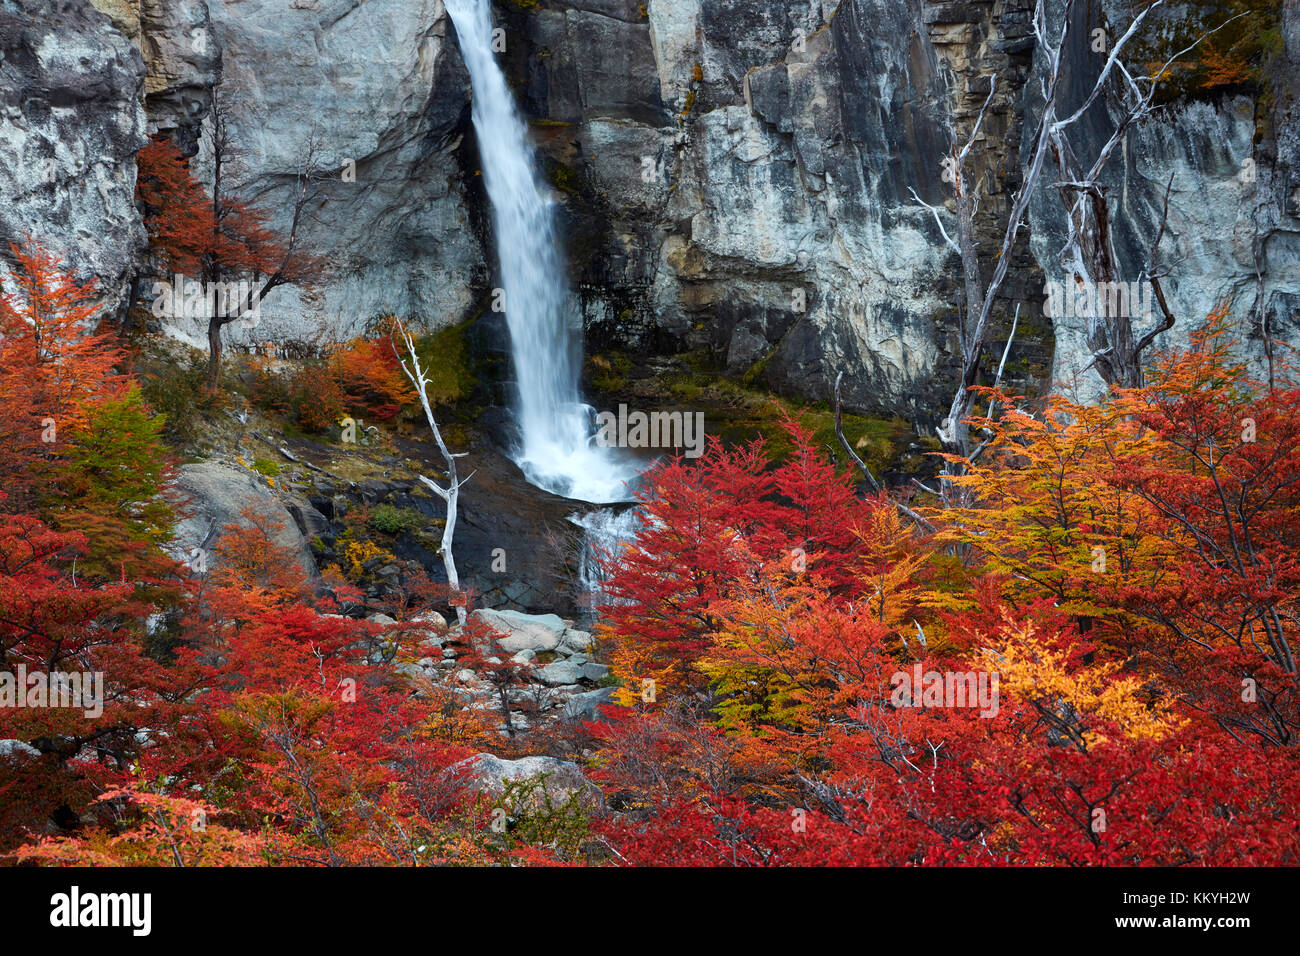 El Chorrillo Wasserfall und Lenga Bäumen im Herbst, in der Nähe von El Chalten, Parque Nacional Los Glaciares, Patagonien, Argentinien, Südamerika Stockfoto